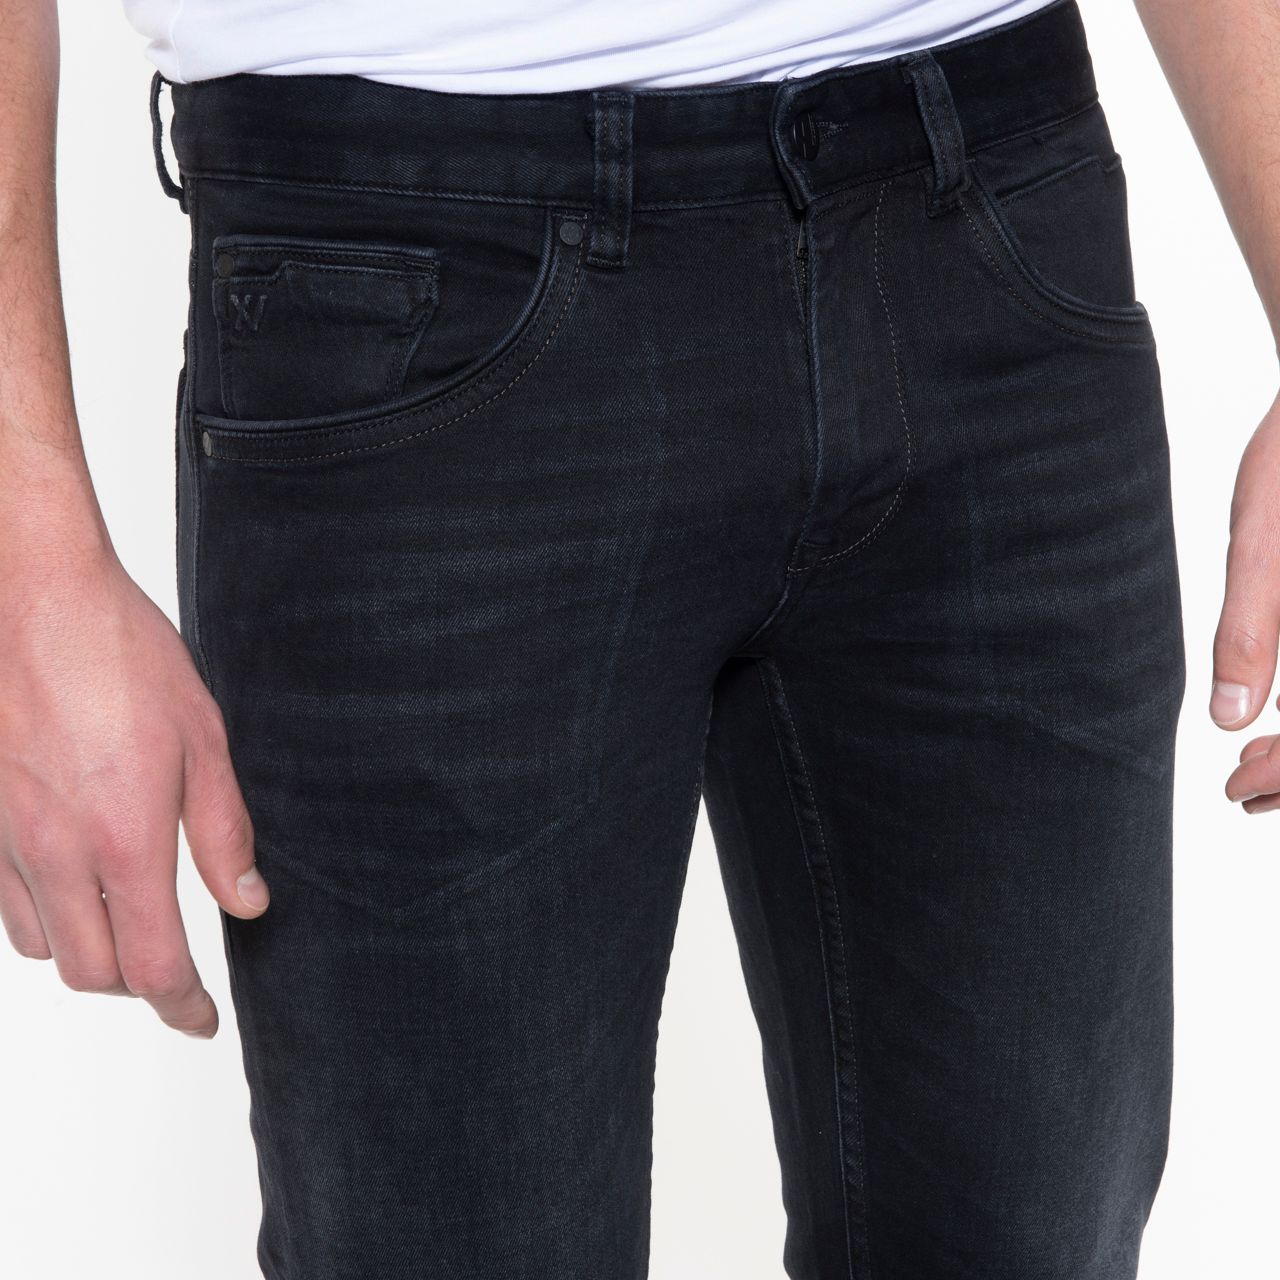 PME Legend XV Faded Black Jeans Zwart 059308-001-28/30